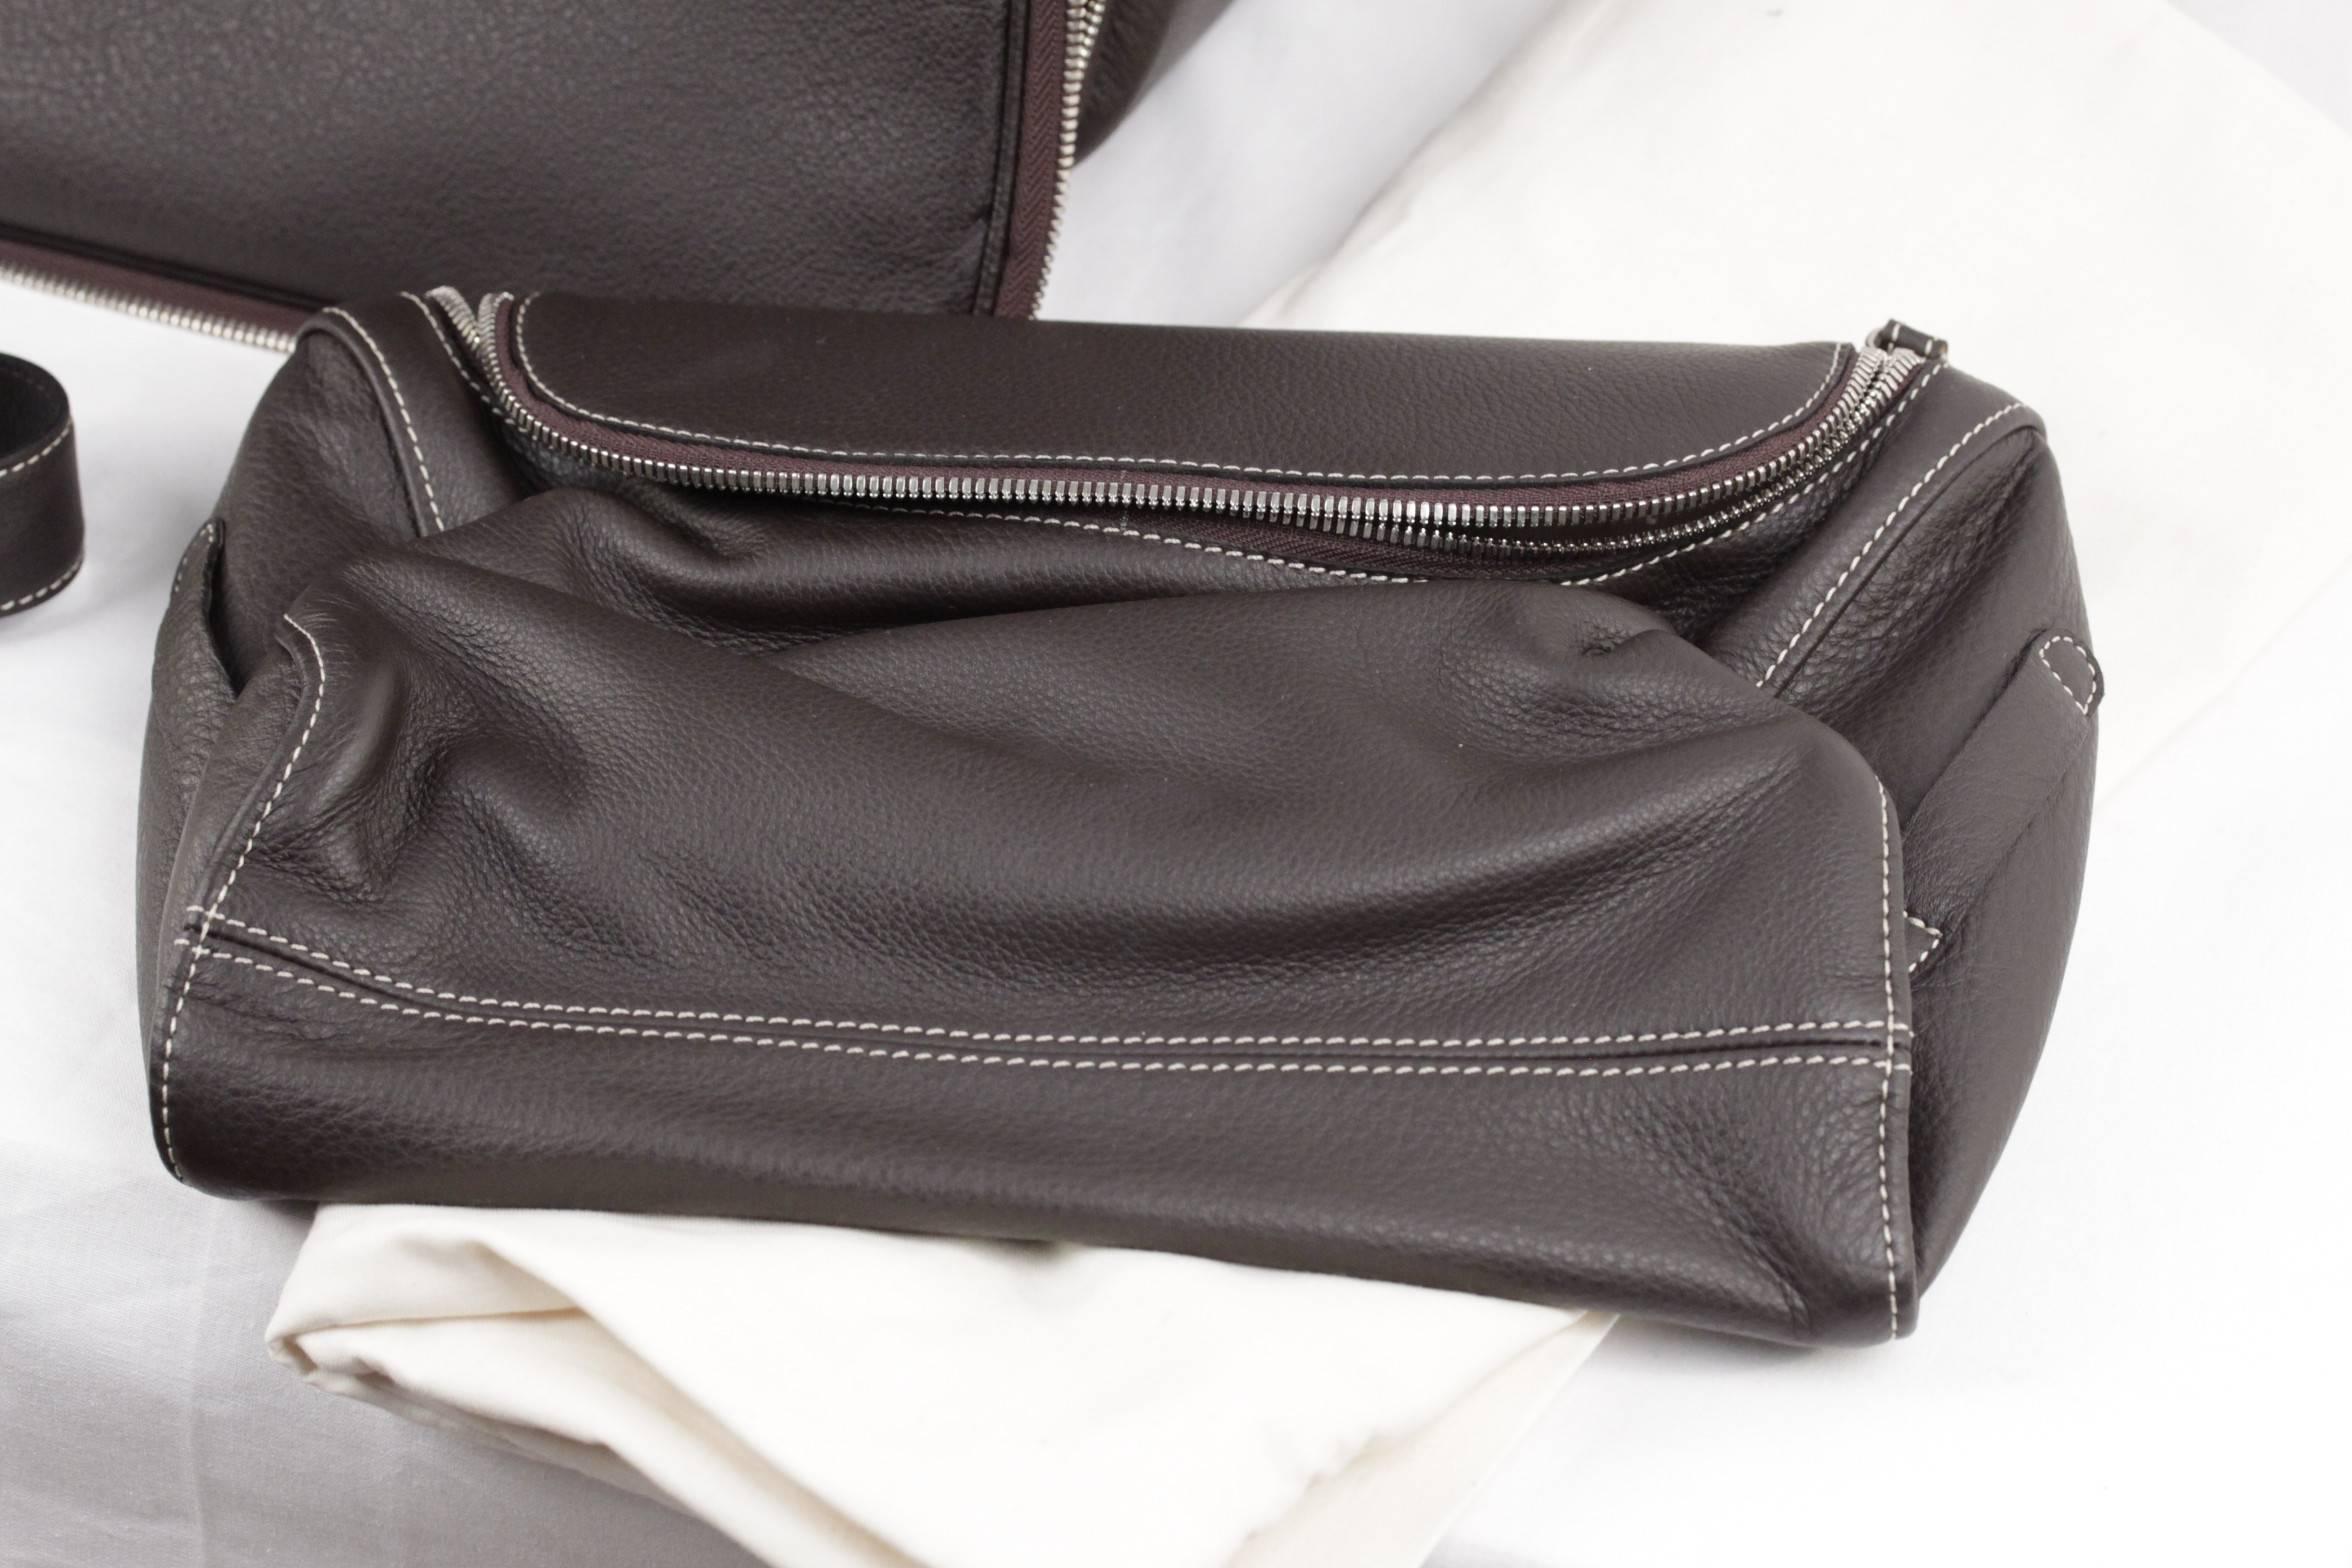 Black BATTISTONI Brown leather GARMENT CARRIER BAG Travel Suit Cover w/ WASH BAG